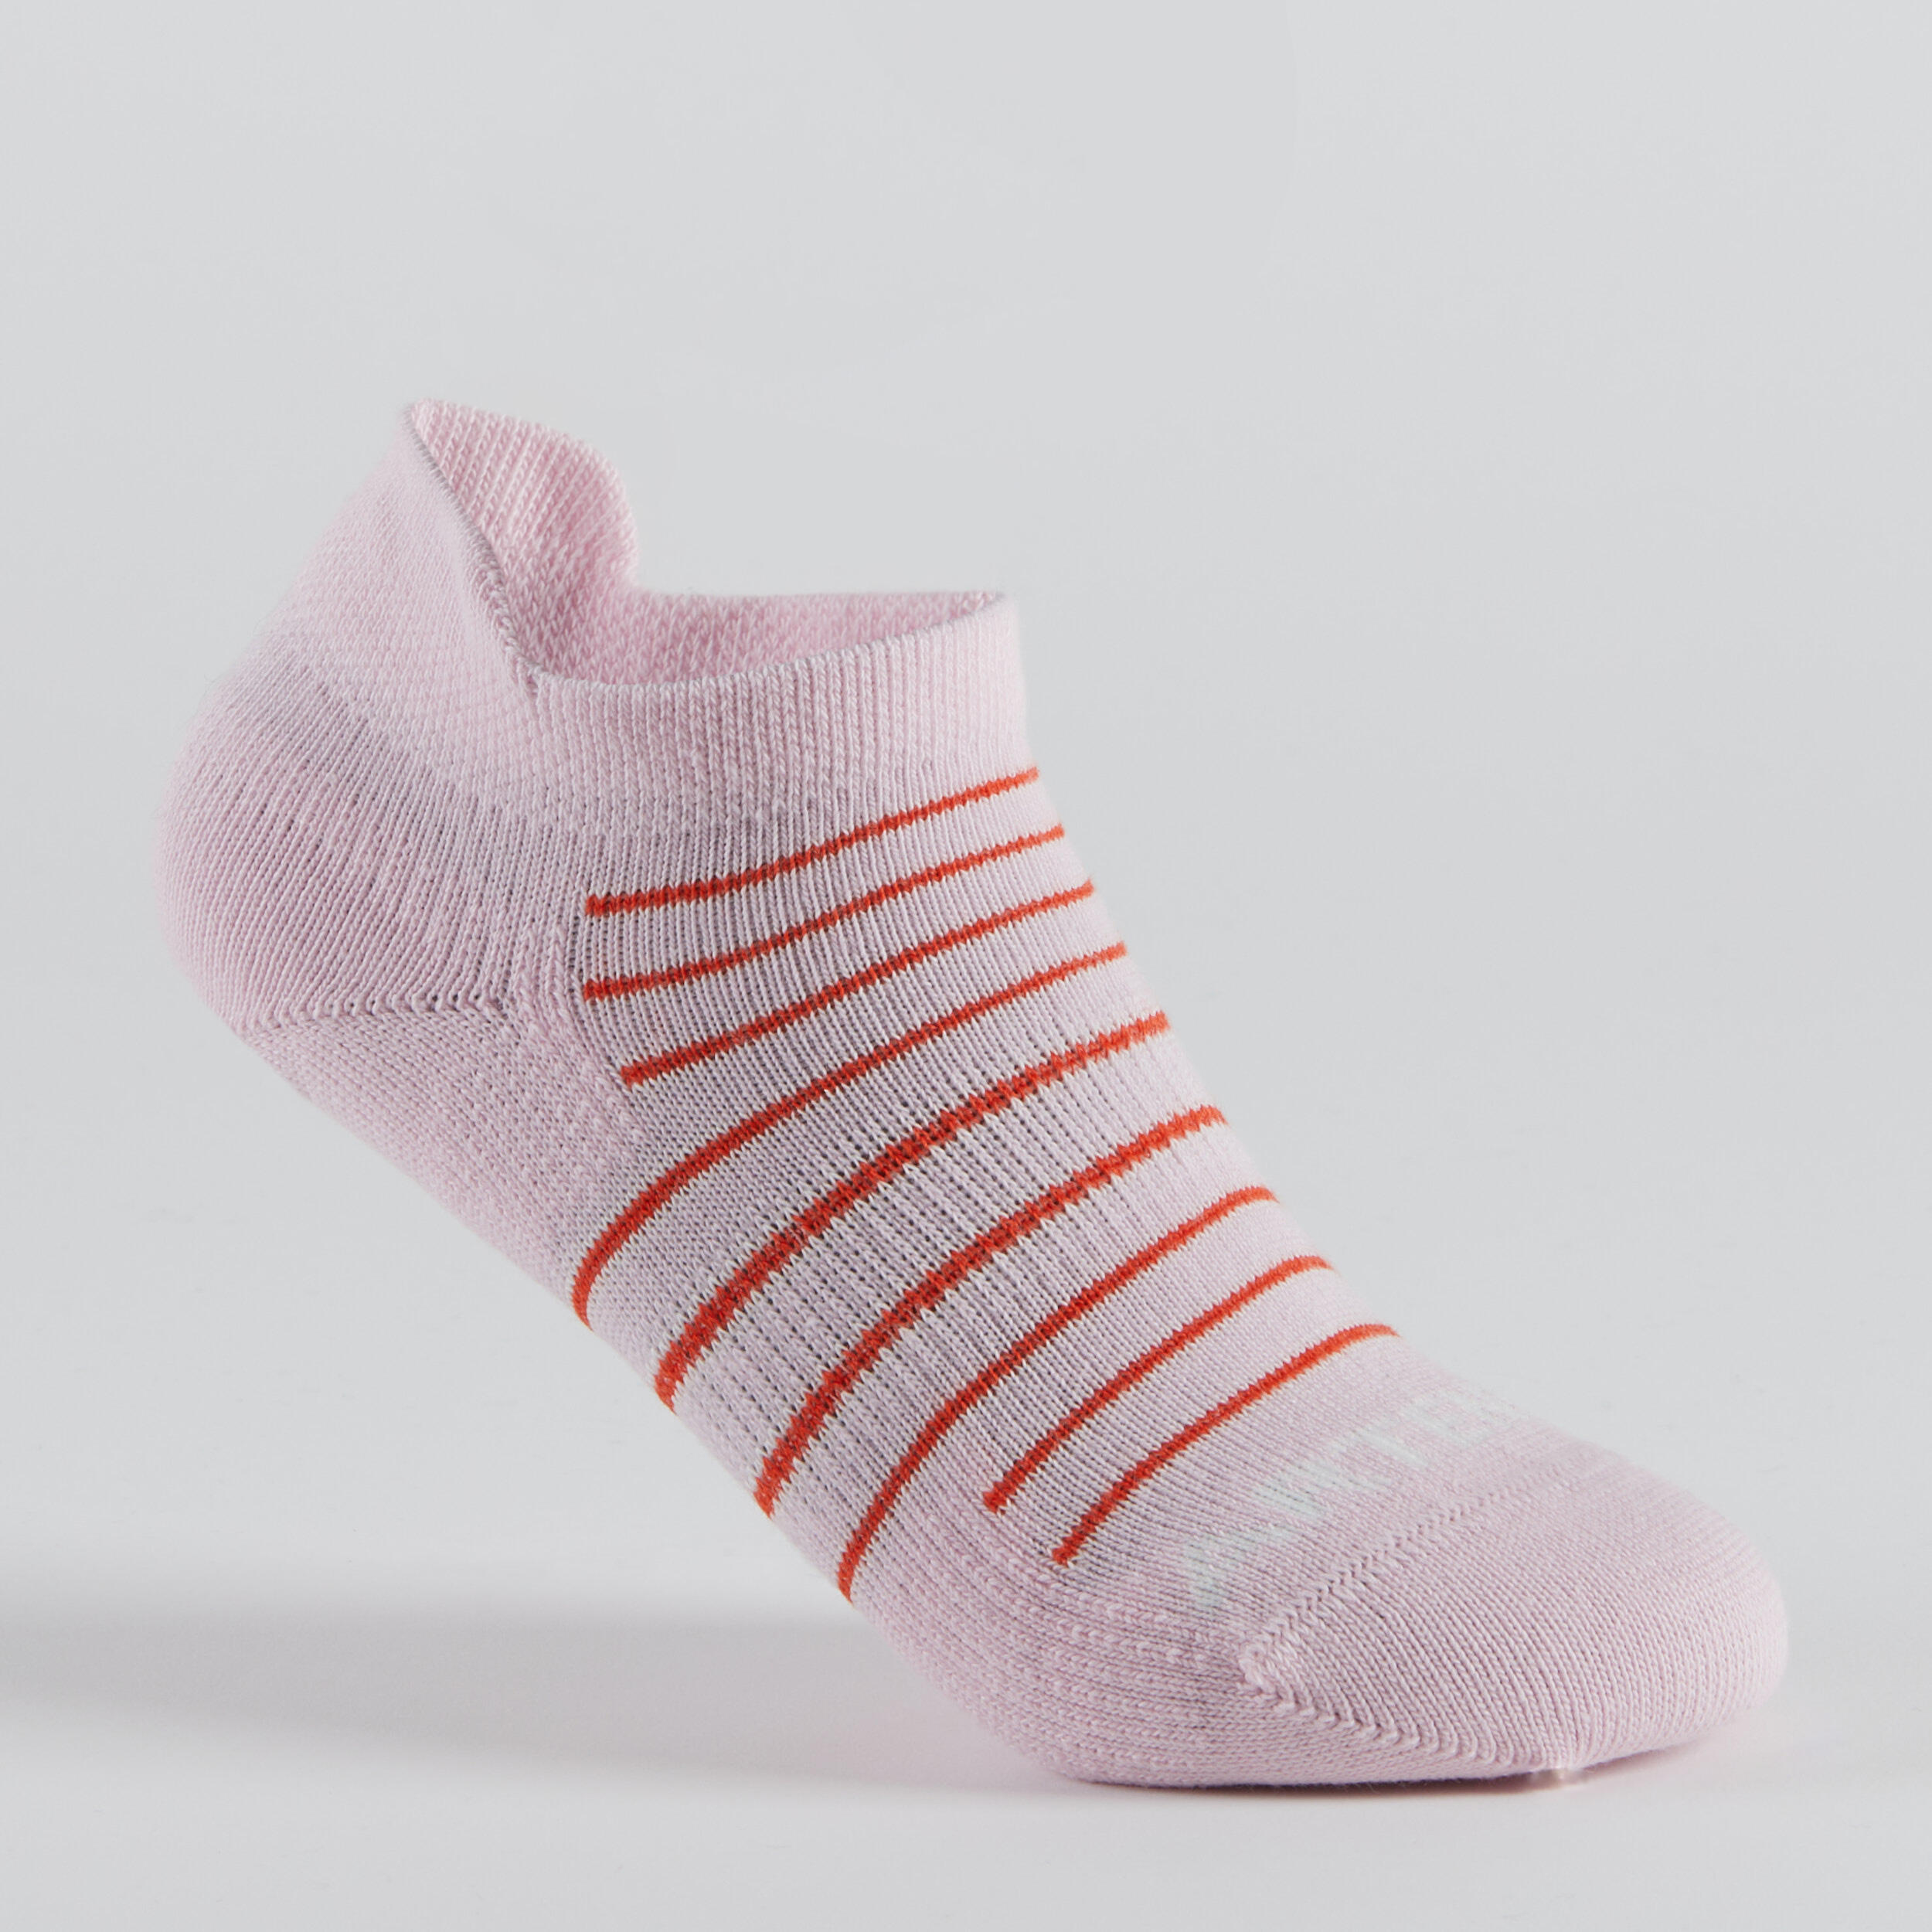 Kids' Low Tennis Socks Tri-Pack RS 160 - Pink/Off-White/Navy 2/14